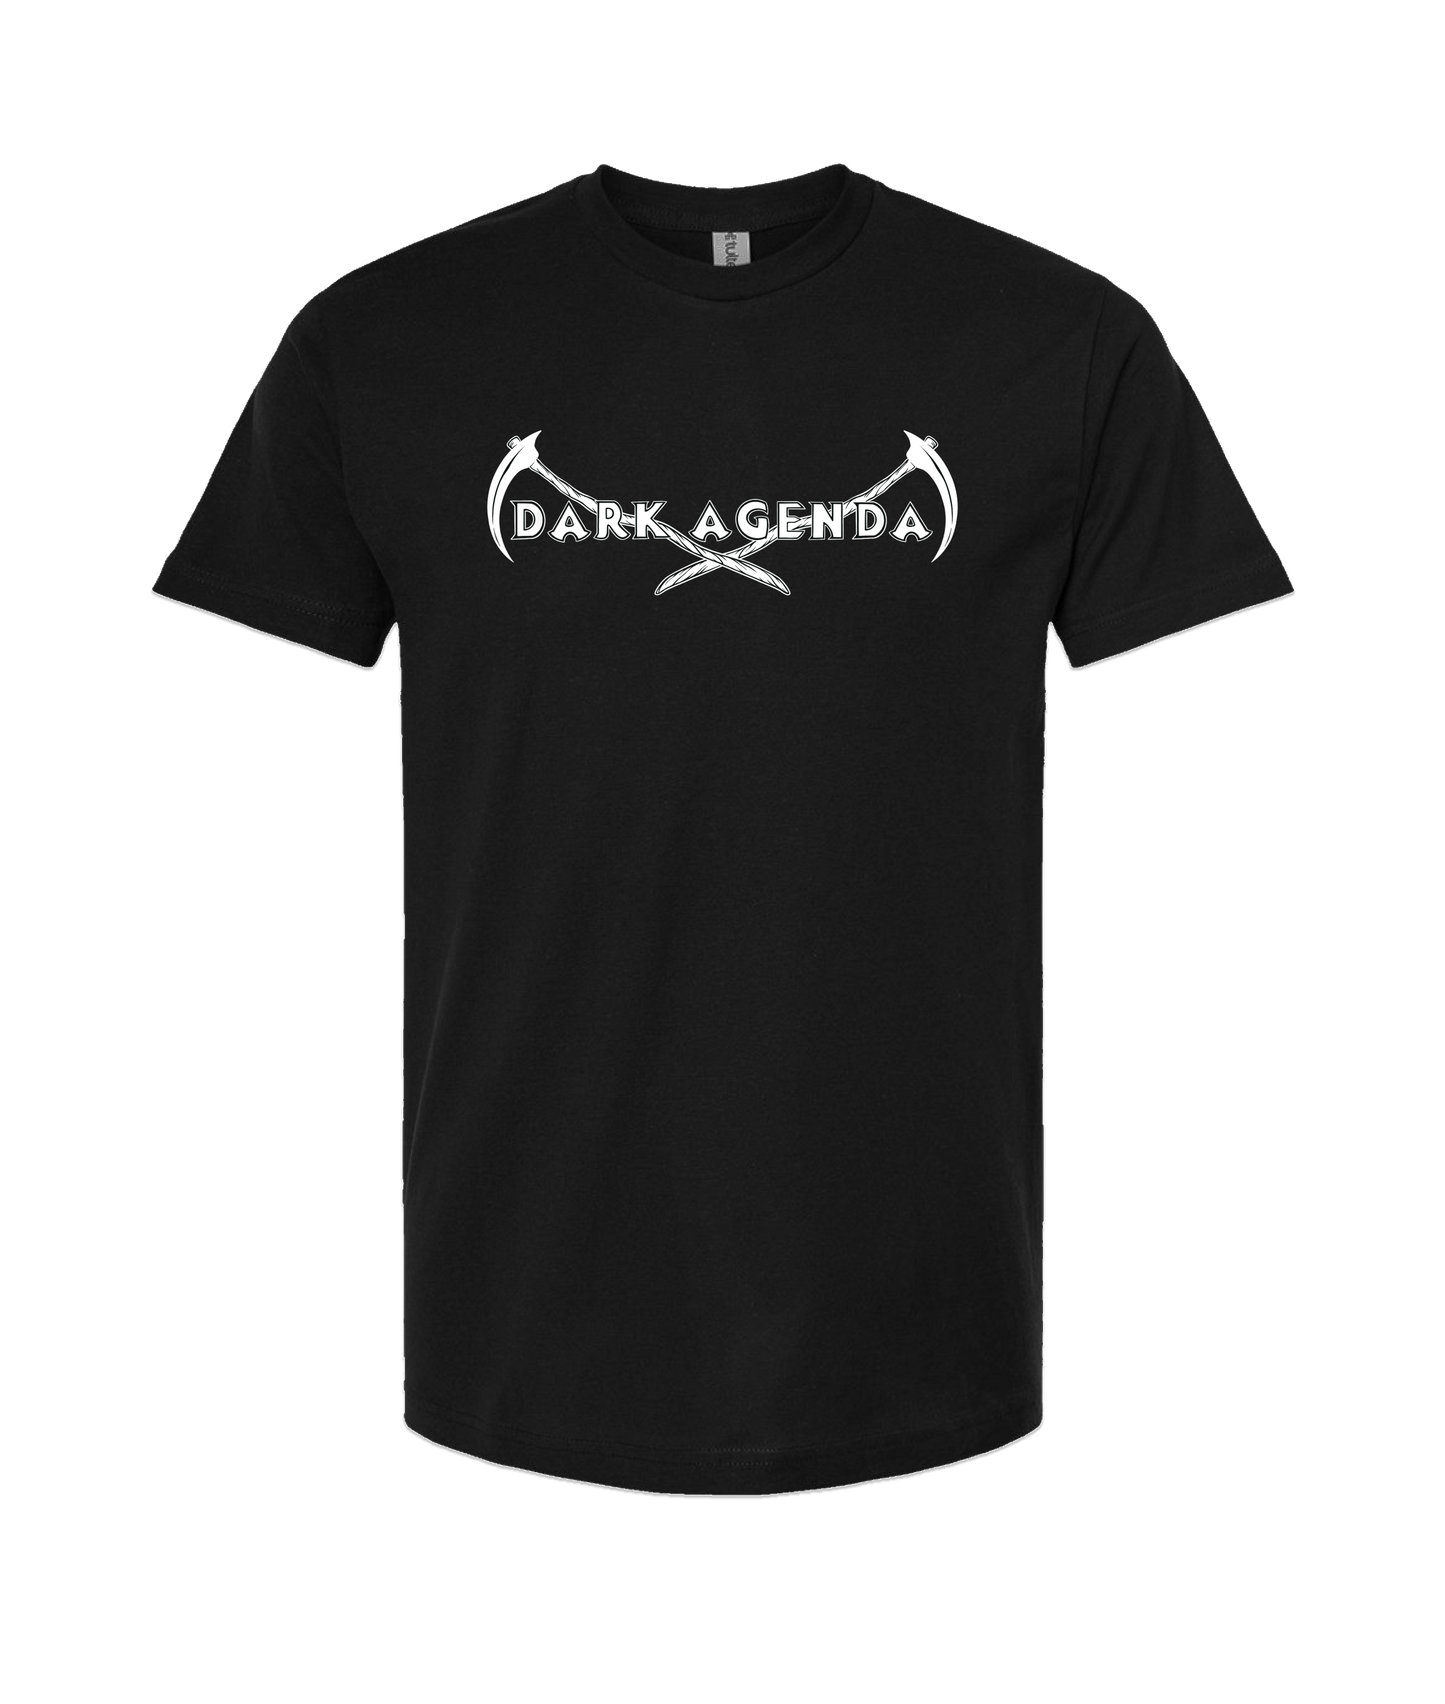 Dark Agenda - Goat - Black T-Shirt